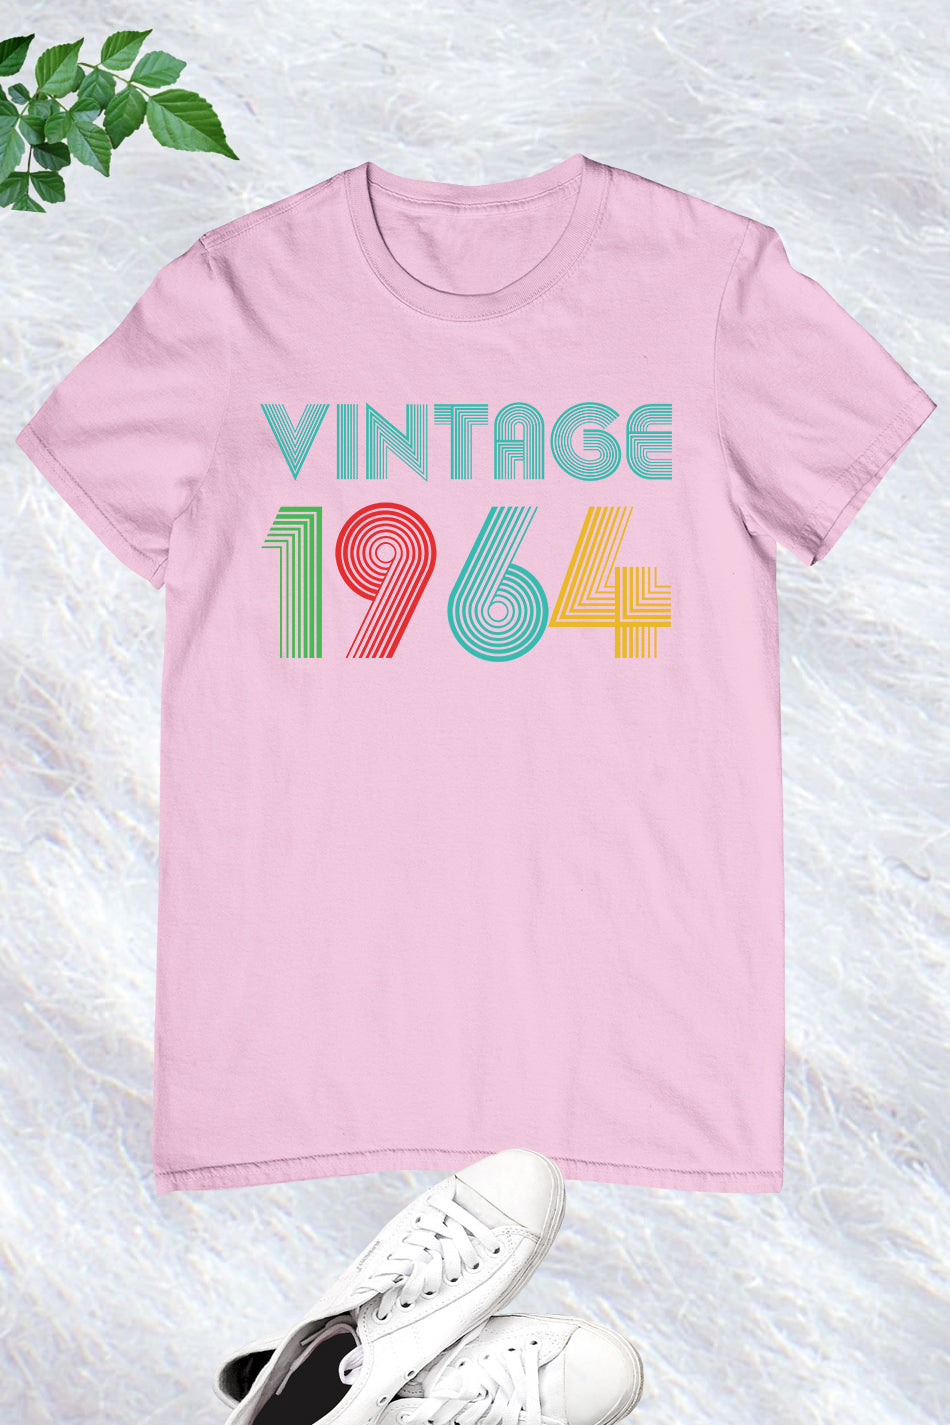 Vintage 1964 Shirt